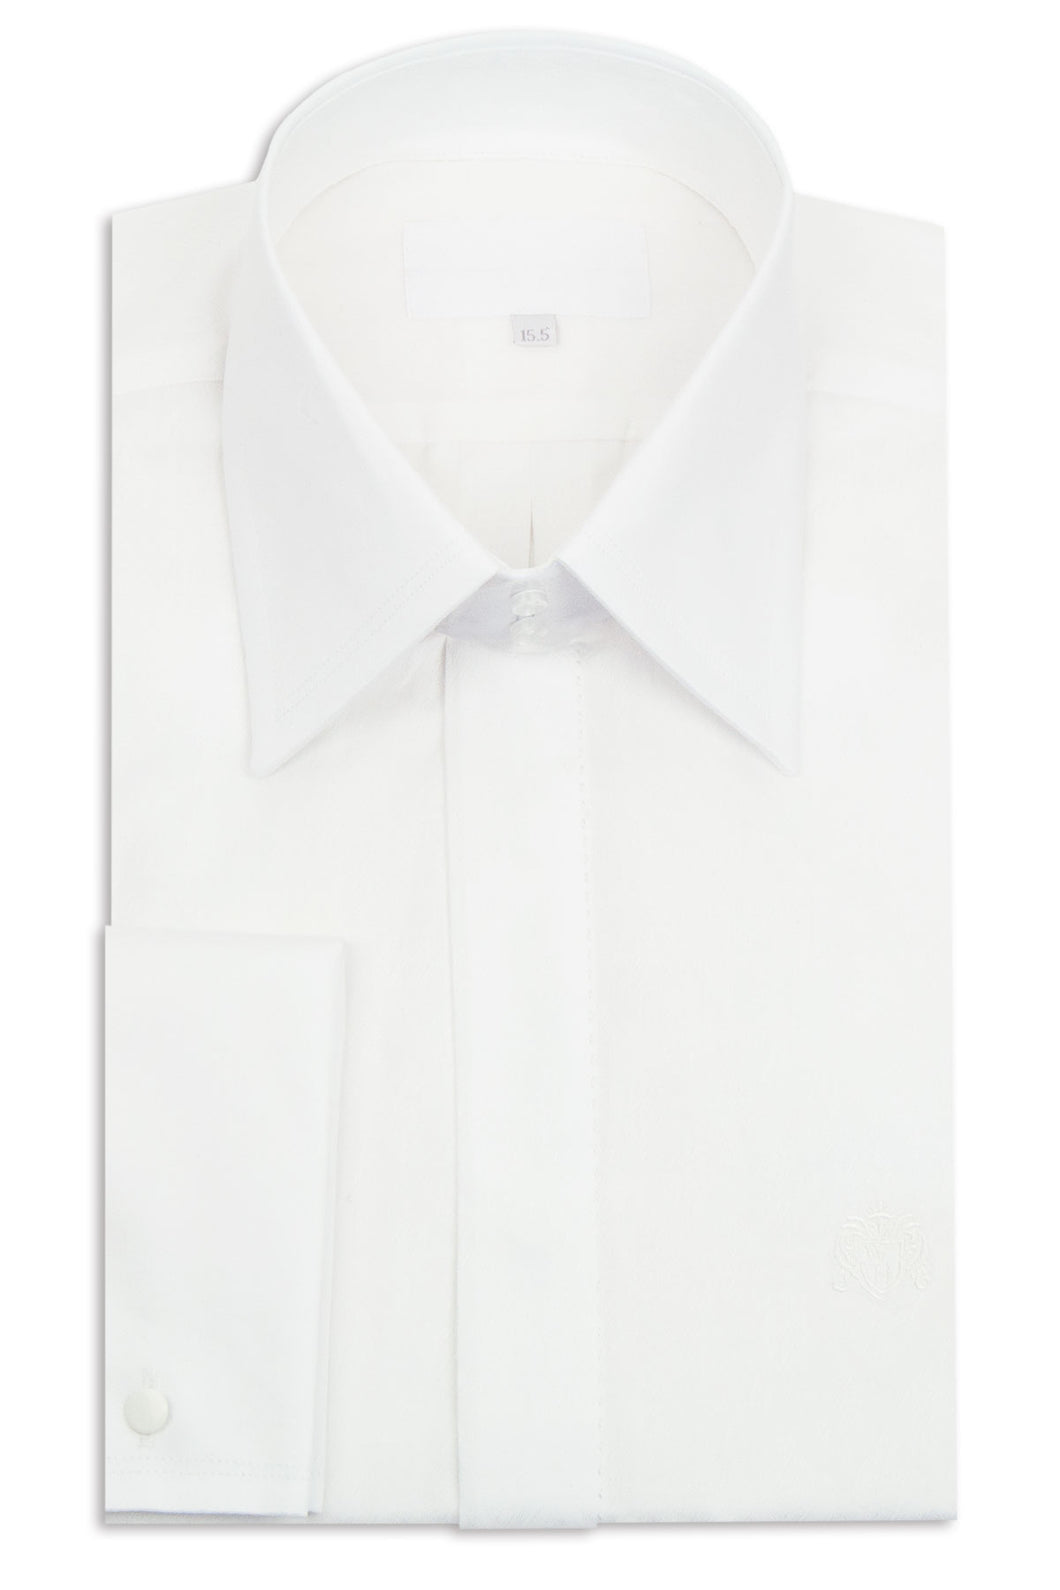 White Criss-Cross Forward Point Collar Shirt